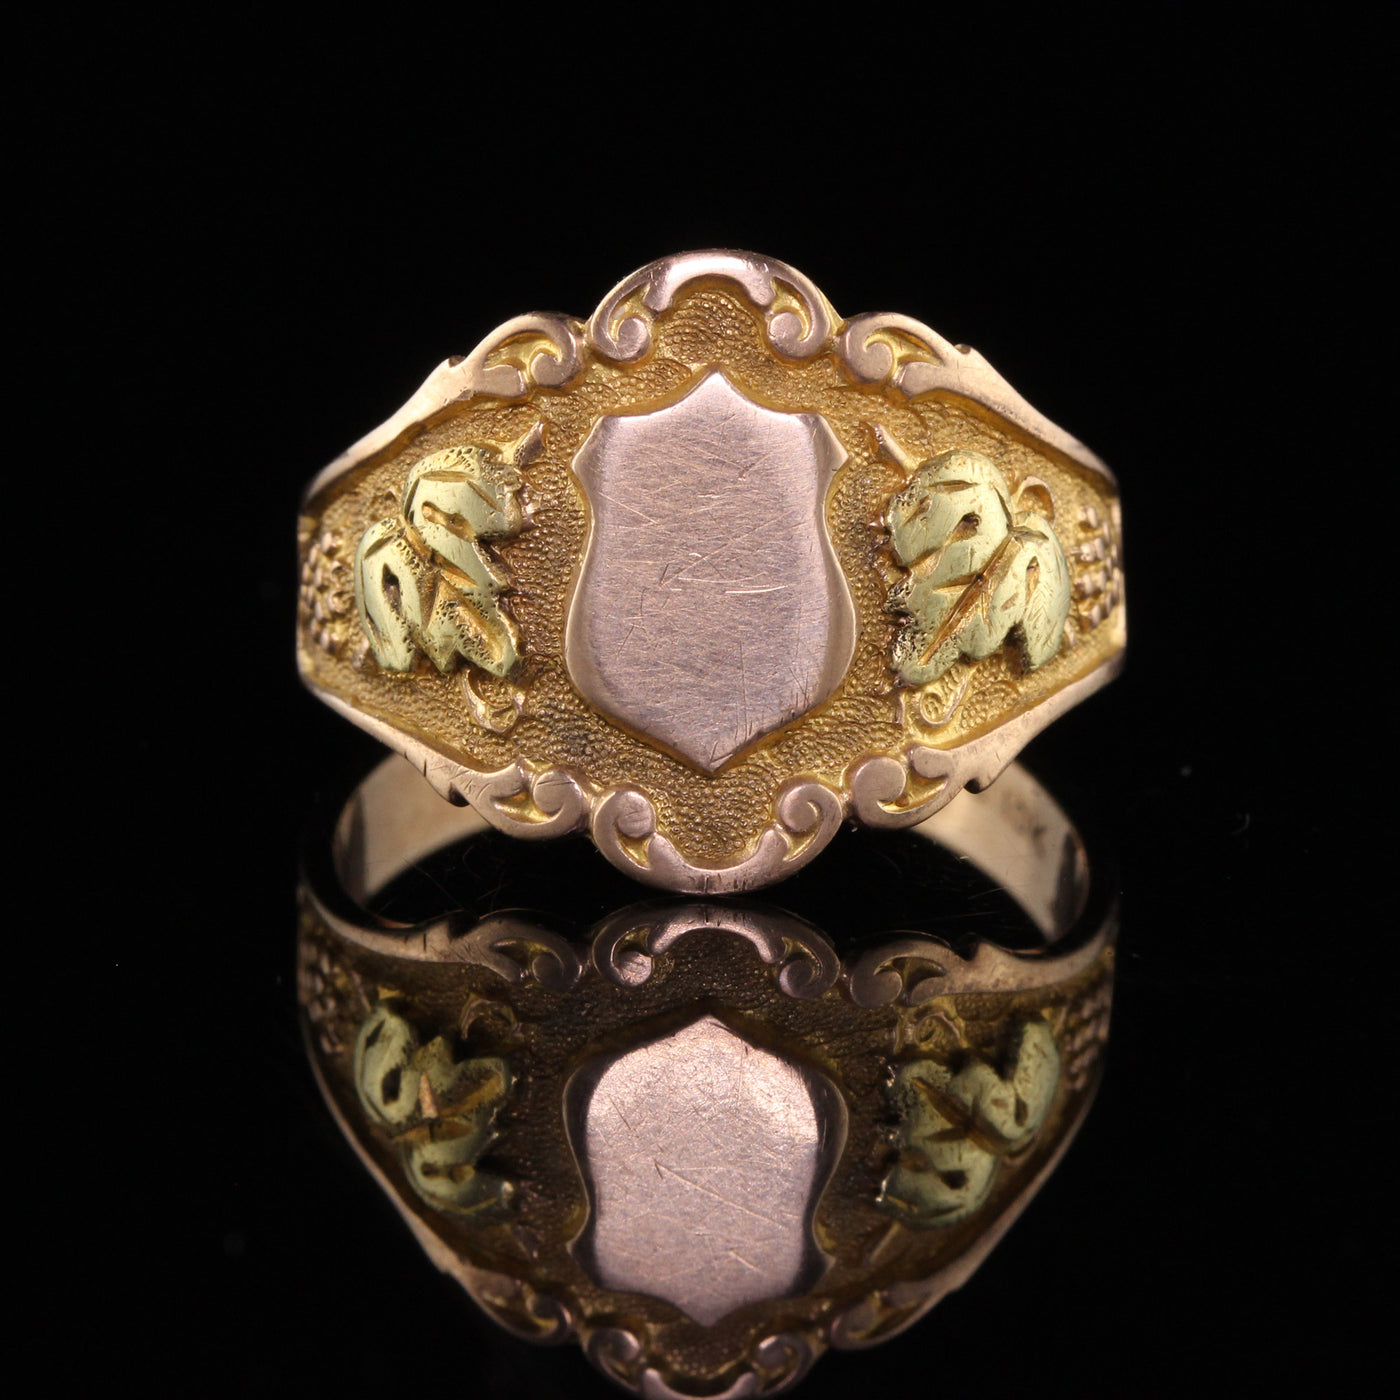 Antique Art Nouveau Otsby Barton 10K Yellow Gold Two Tone Signet Ring